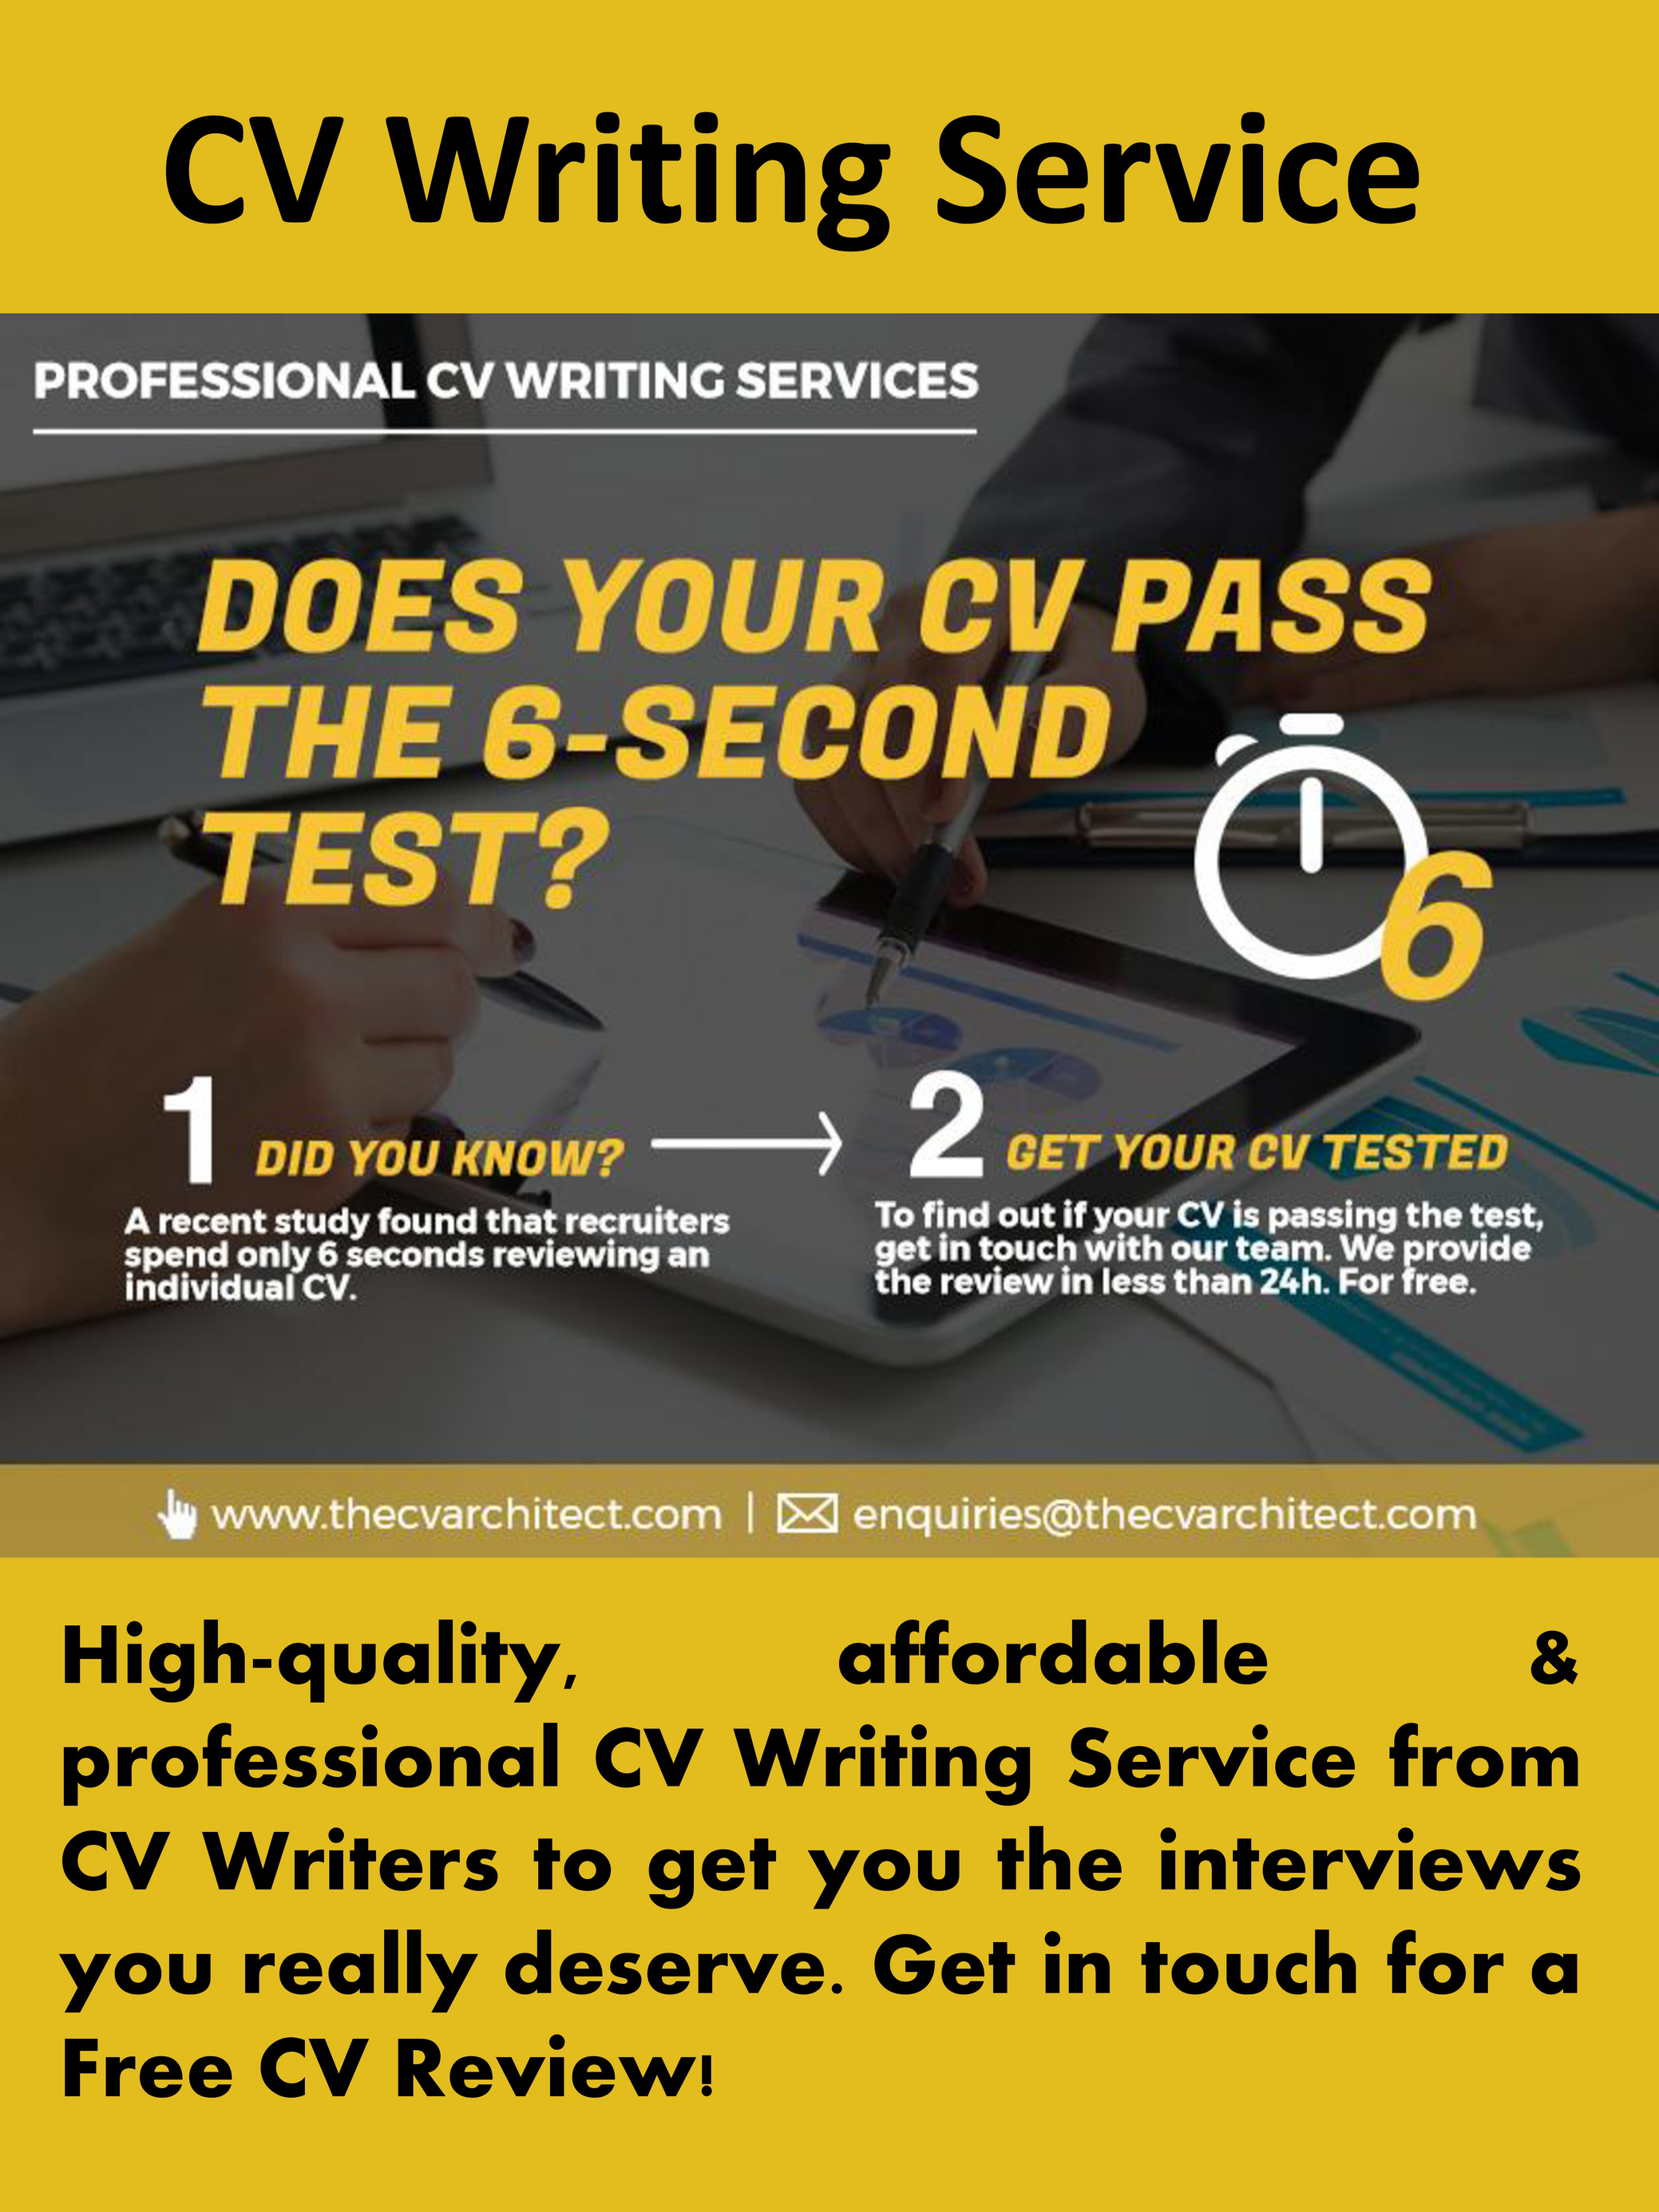 professional cv writing service ireland